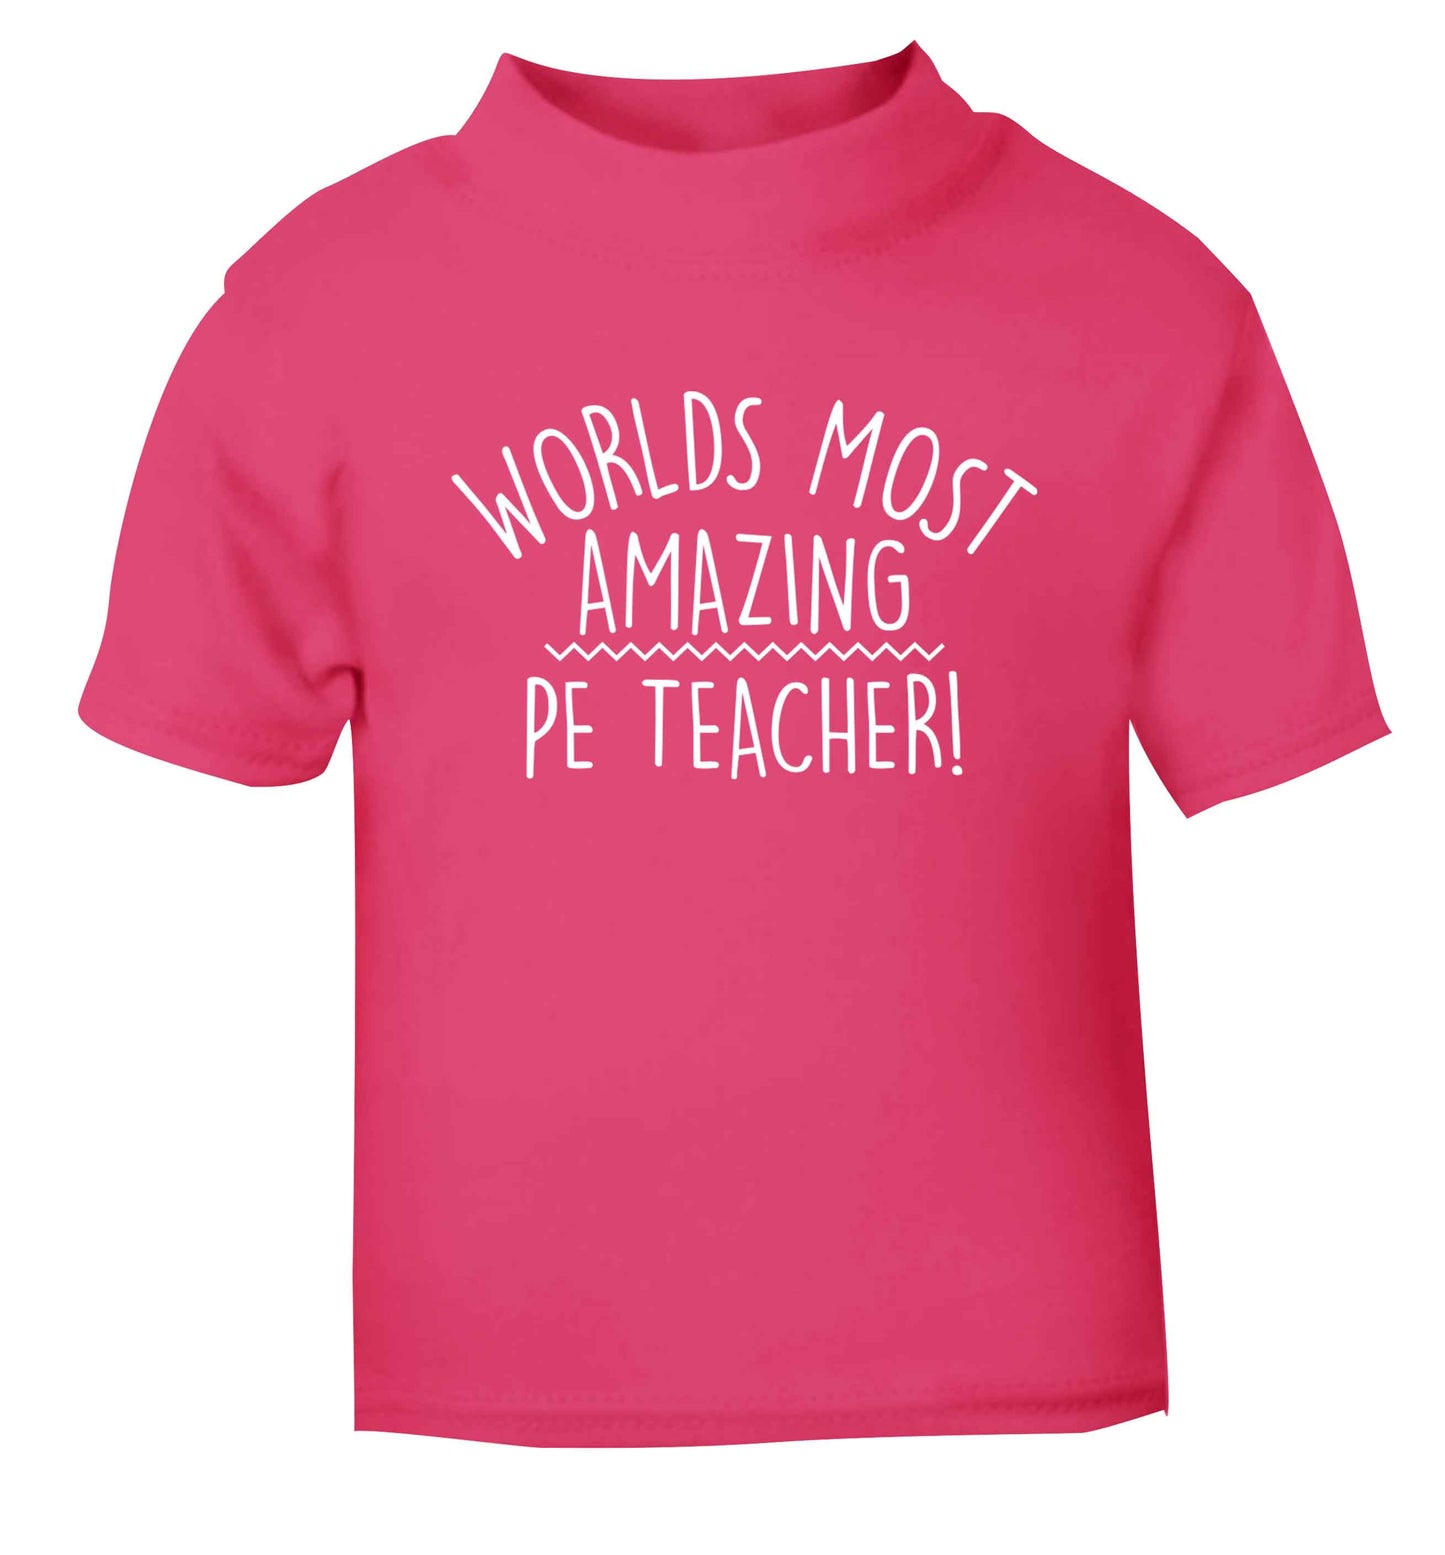 Worlds most amazing PE teacher pink baby toddler Tshirt 2 Years